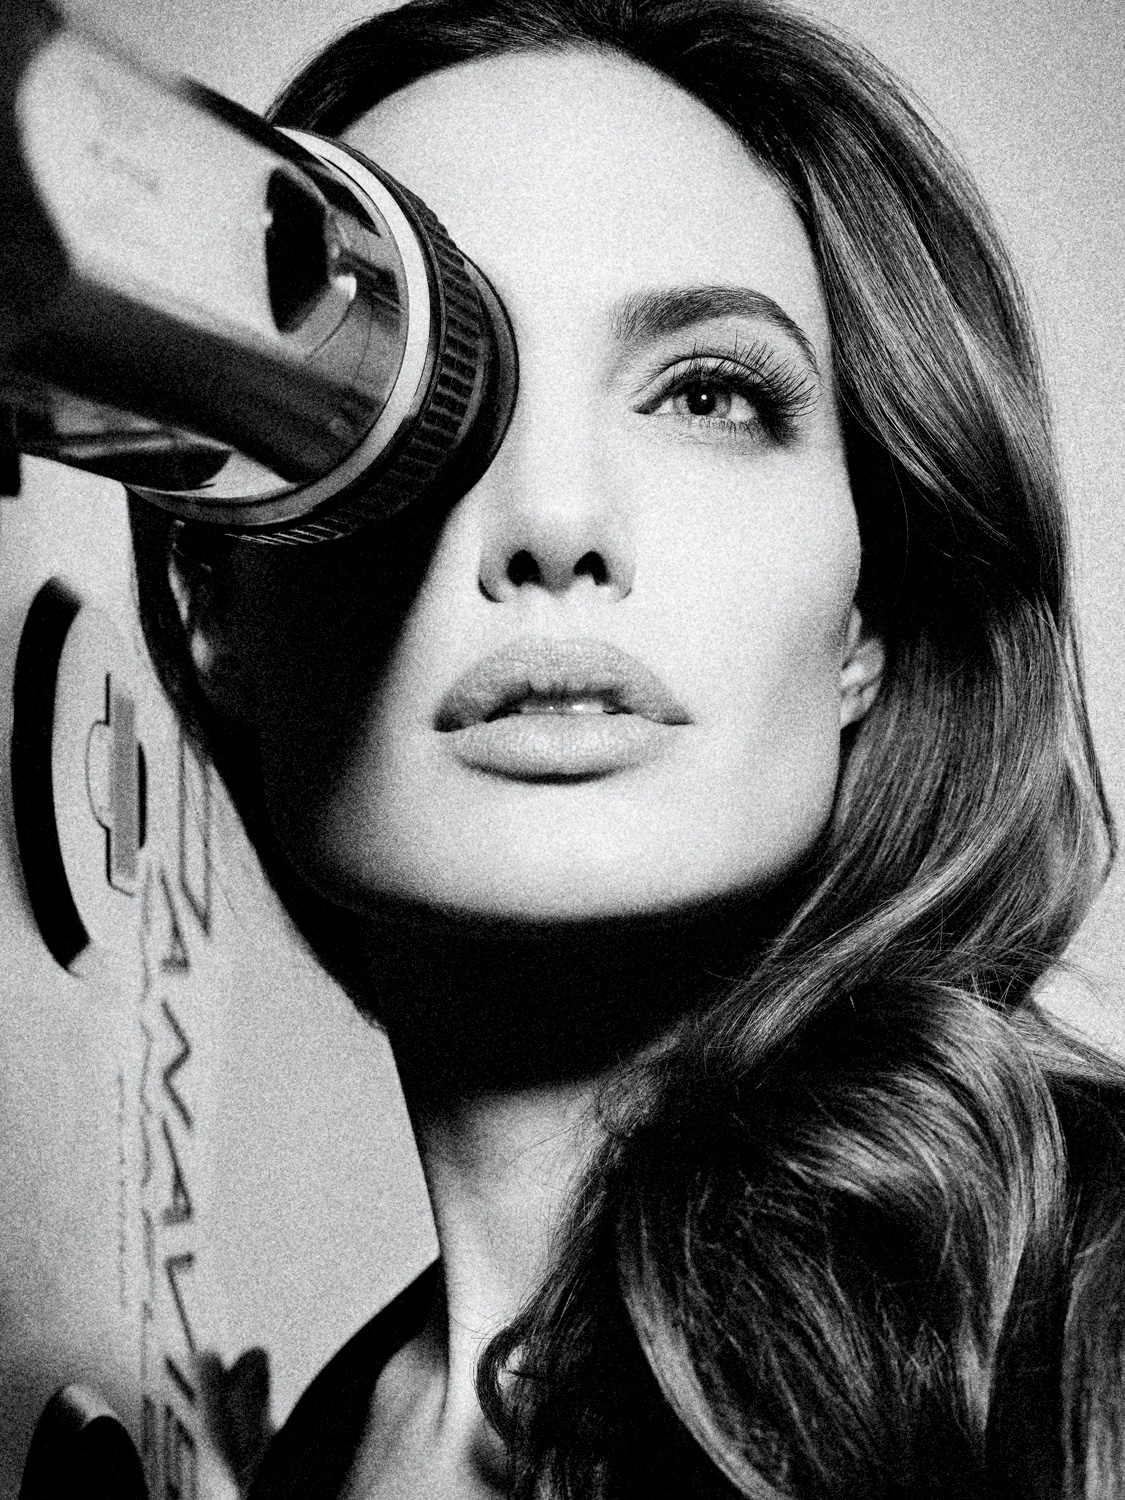 Angelina Jolie - Interview Magazine